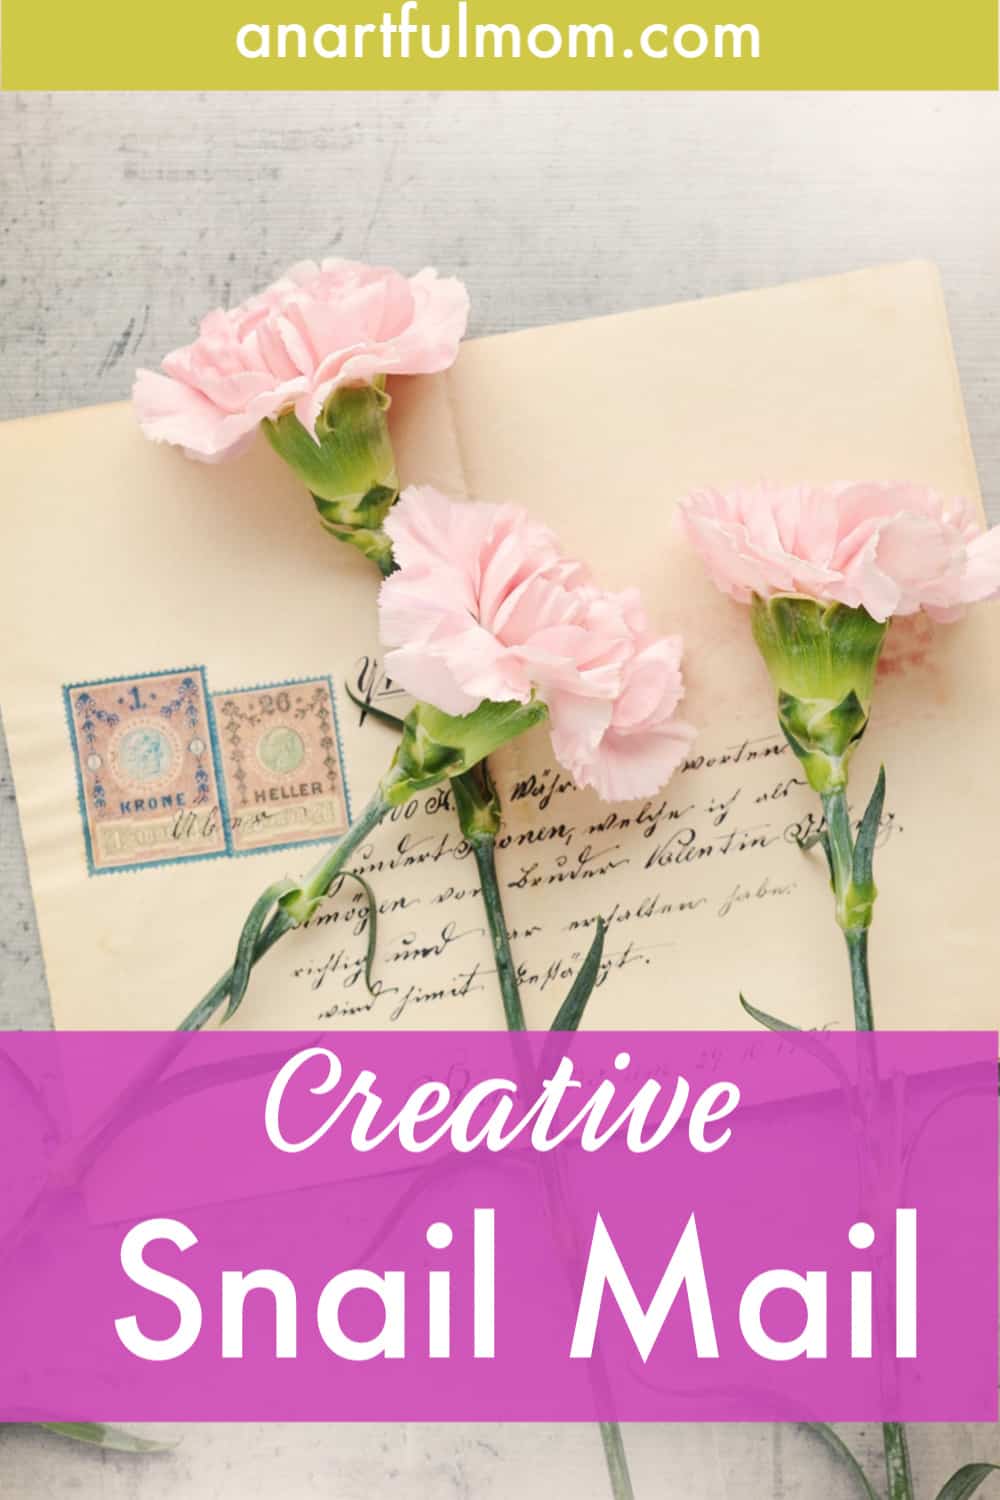 Ways to send creative snail mail